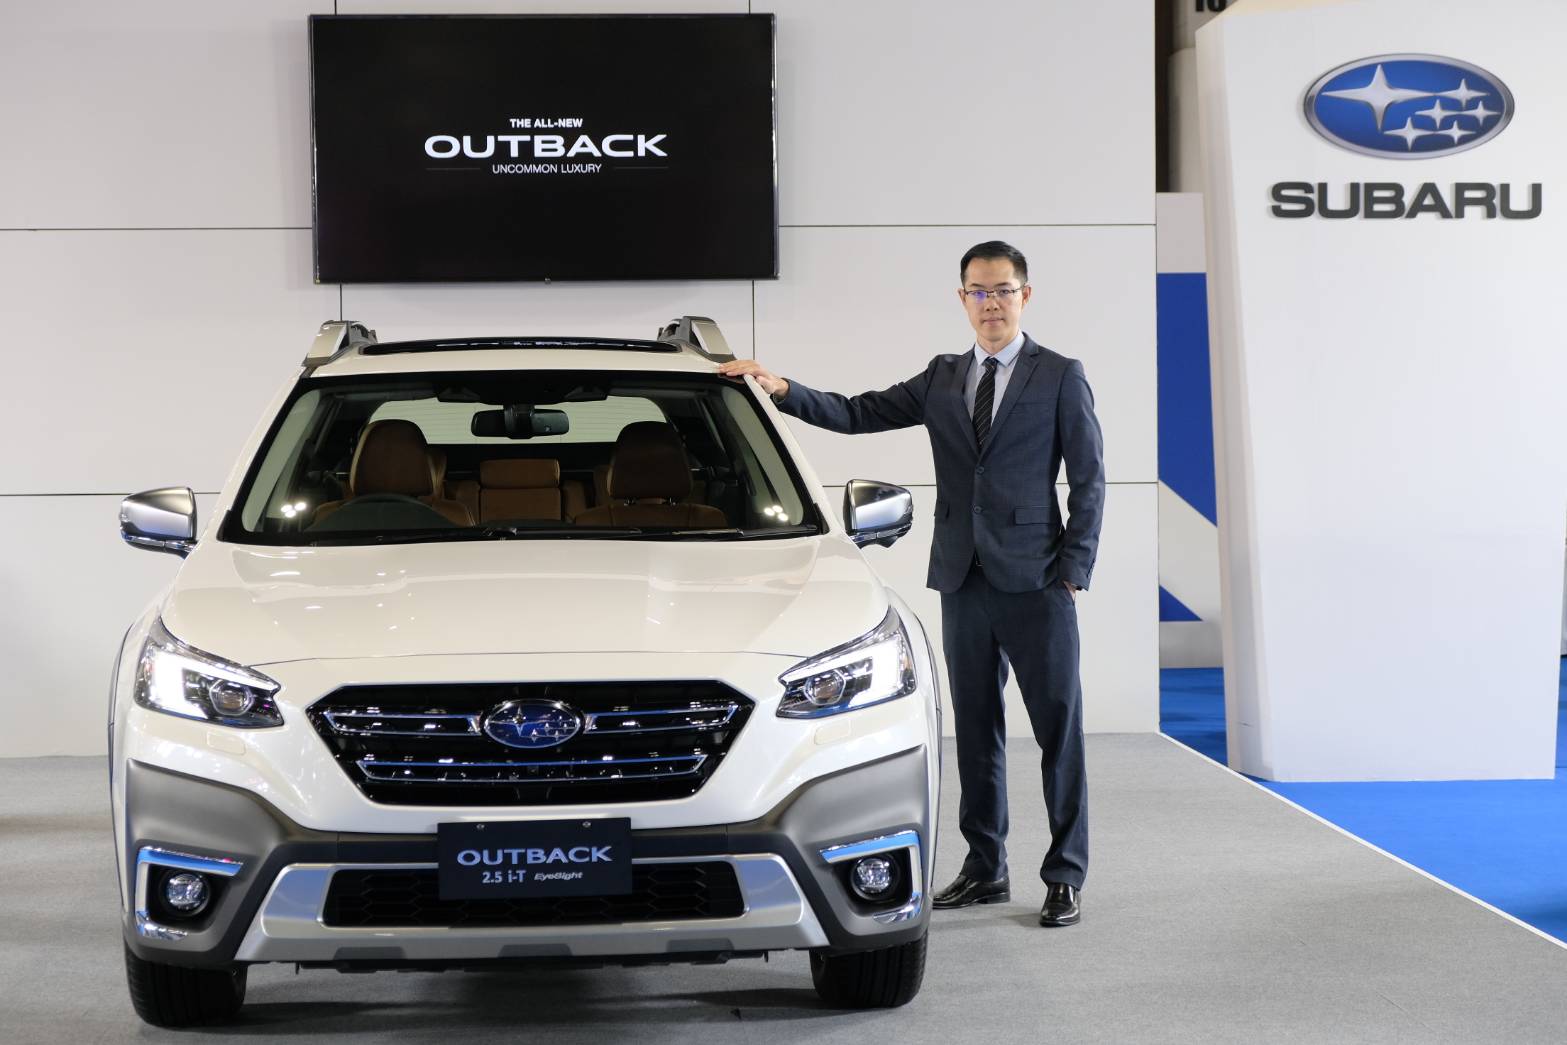 The All-New OUTBACK ปรากฏตัวครั้งแรกในอาเซียน ที่งานบางกอก อินเตอร์เนชั่นแนล มอเตอร์โชว์ ครั้งที่42 -มาพร้อม ‘Subaru EyeSight 4.0’ เทคโนโลยีความปลอดภัยใหม่ล่าสุด-